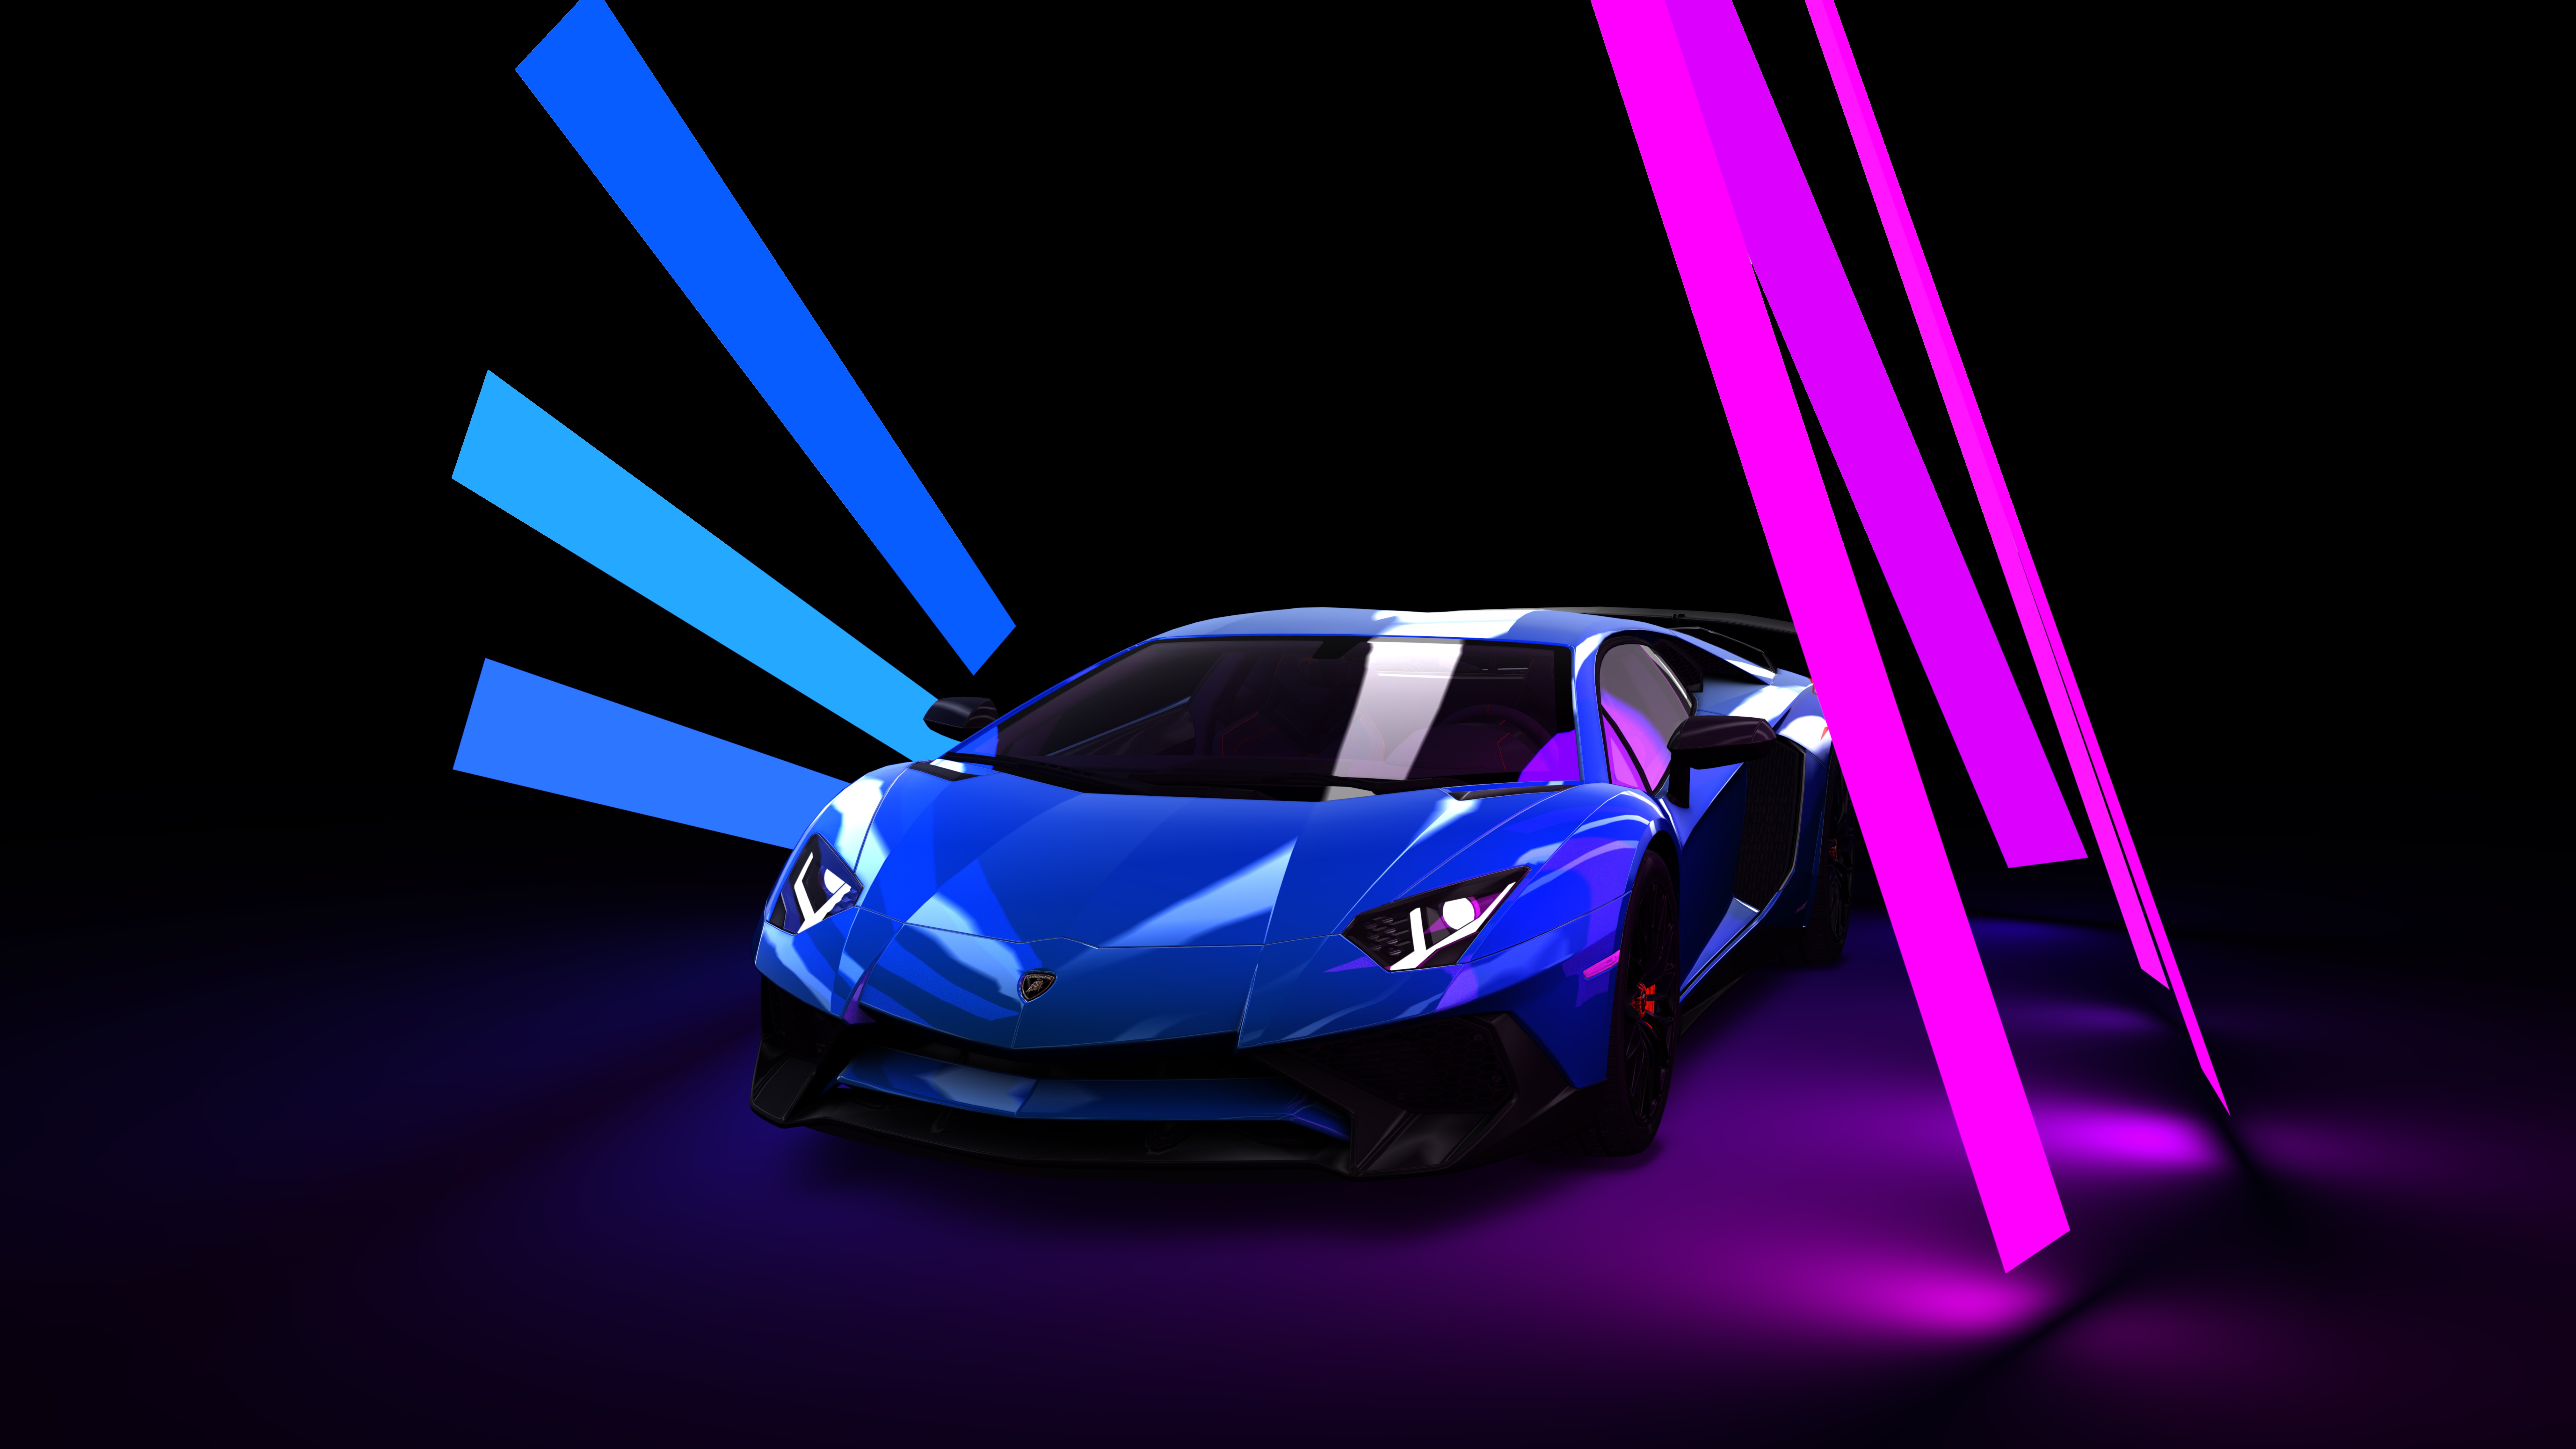 Lamborghini 4K wallpapers for your desktop or mobile screen free and